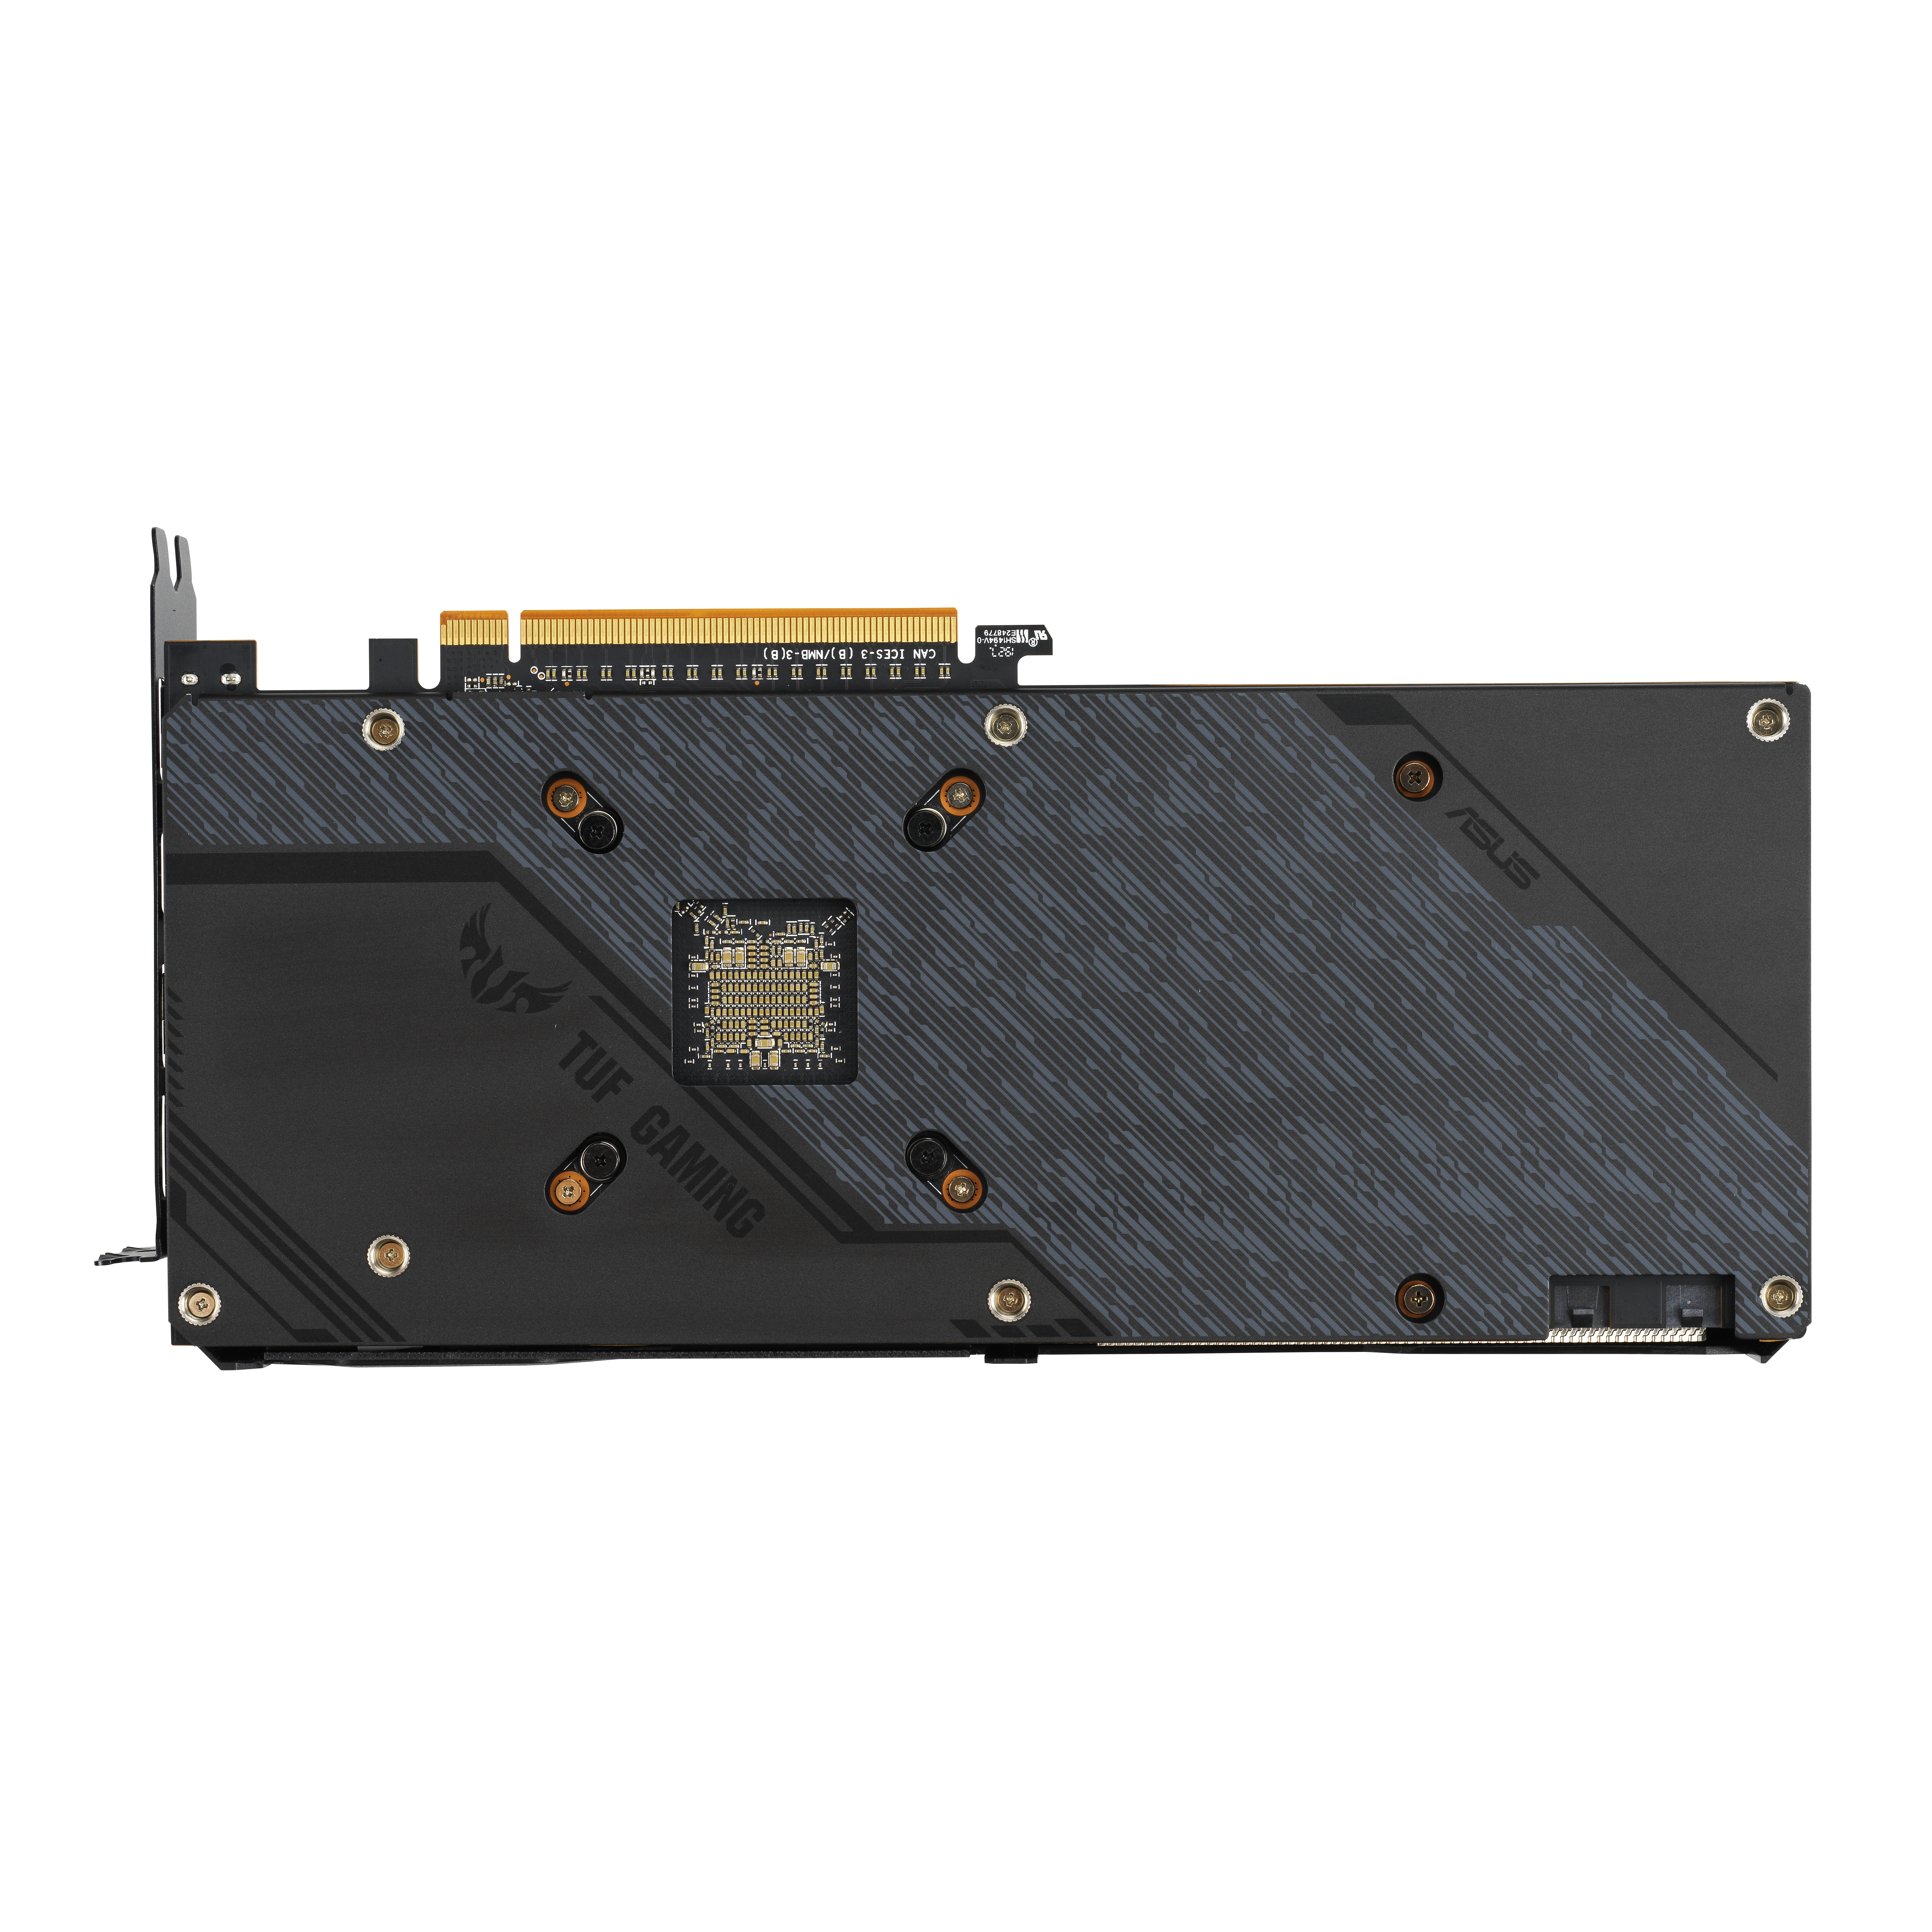 ASUS Radeon™ RX 5700 TUF (AMD, 8GB Grafikkarte) 3 XT (90YV0DA0-M0NA00) Gaming OC